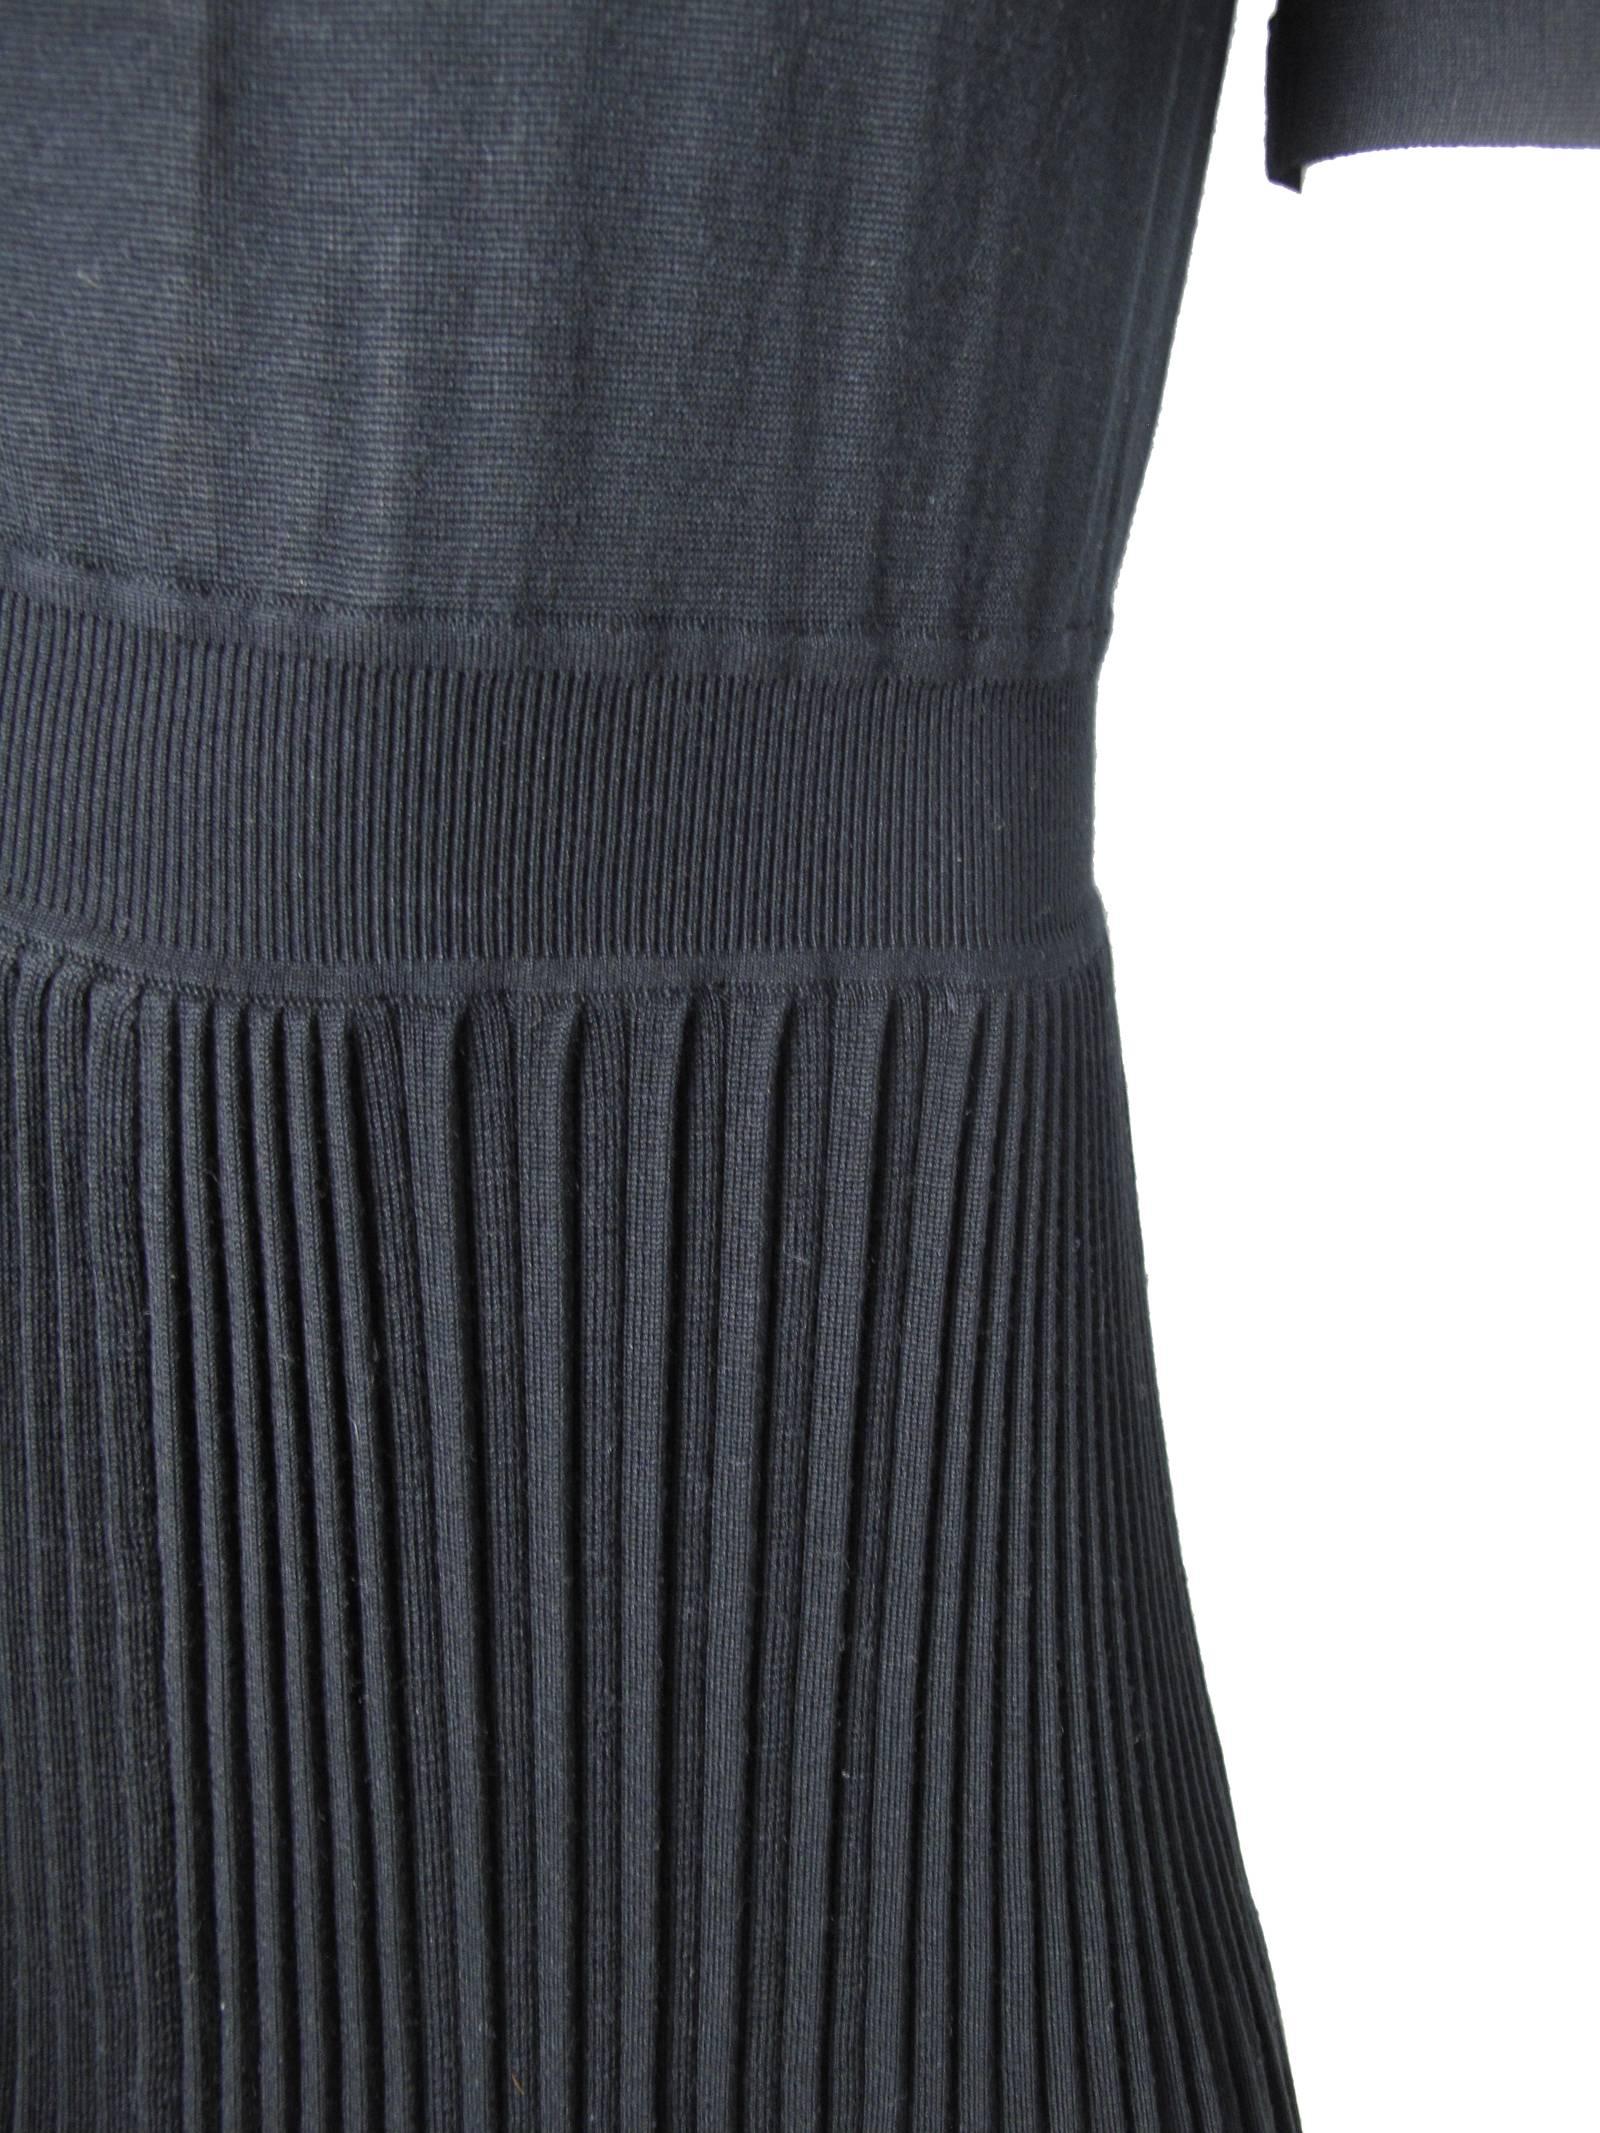 Balenciaga Black Silk Cashmere Dress with Pleating 1